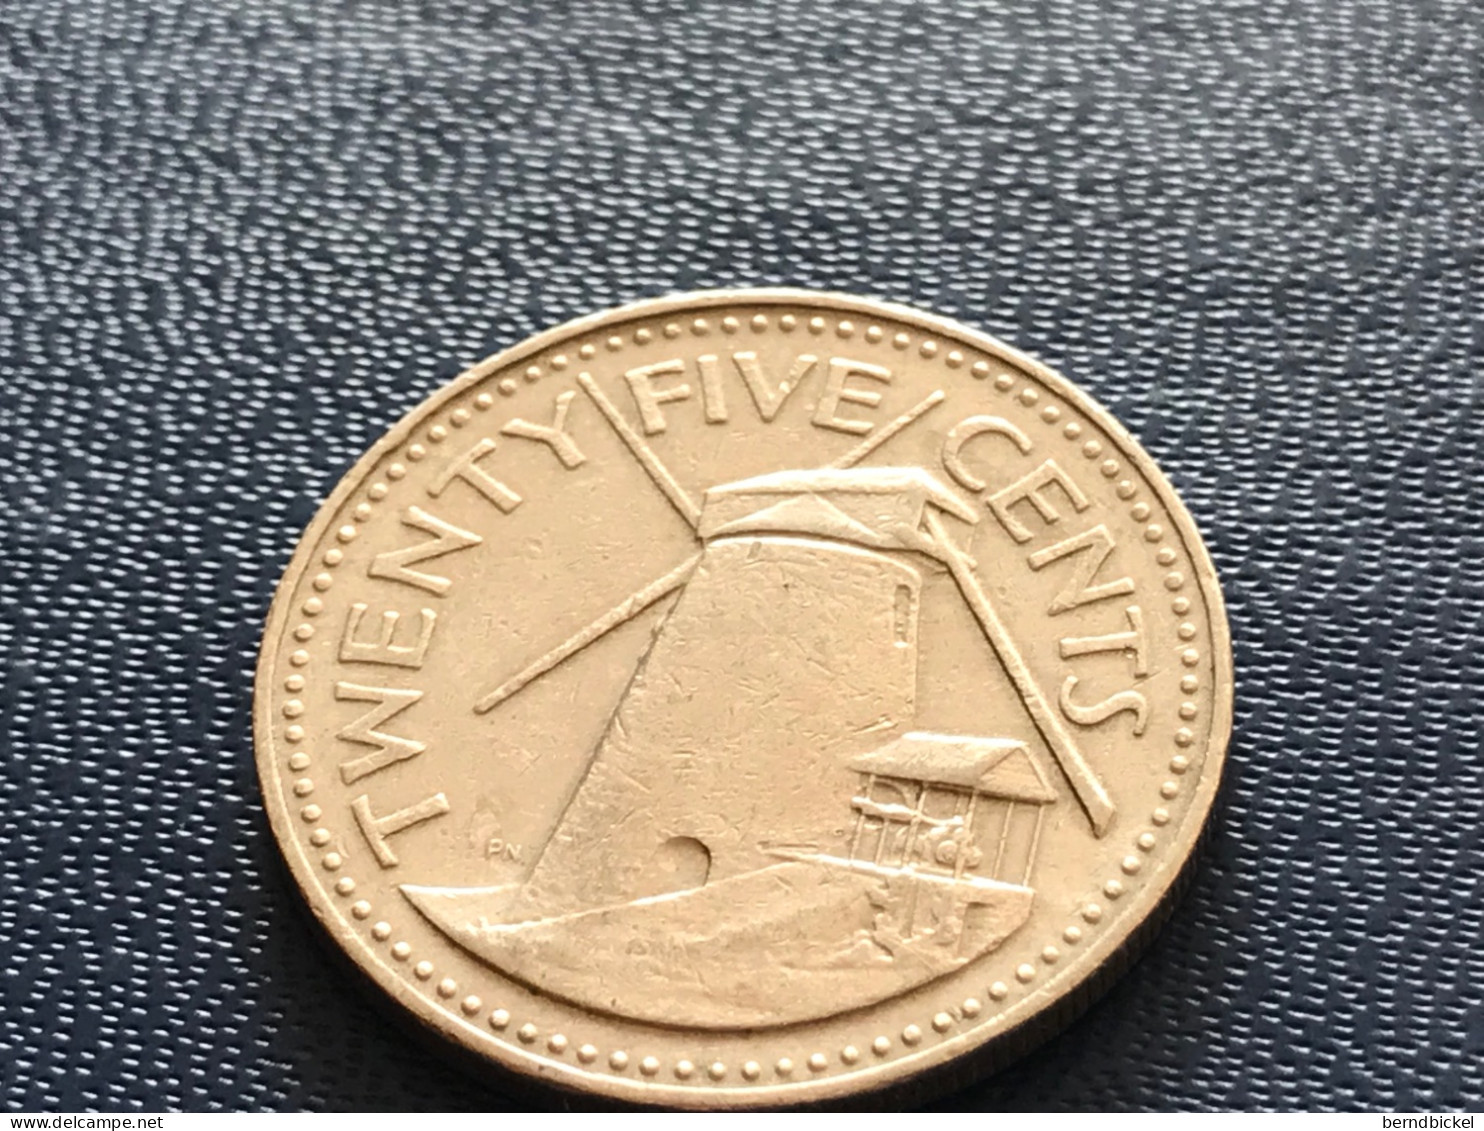 Münze Münzen Umlaufmünze Barbados 25 Cent 1987 - Barbados